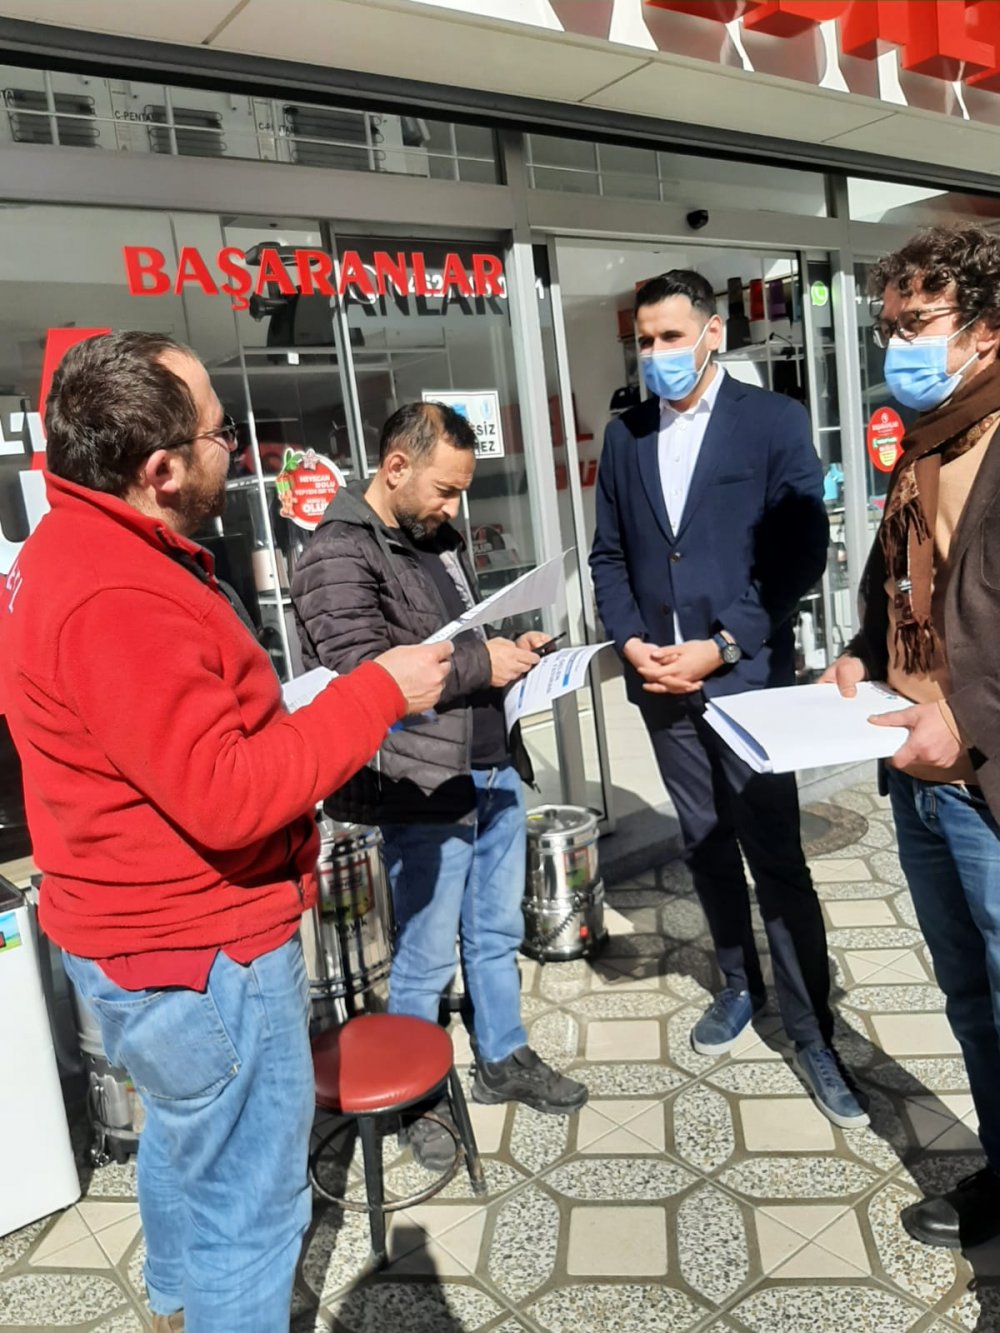 DEVA Partisi Trabzon'dan elektrik faturalarına tepki!